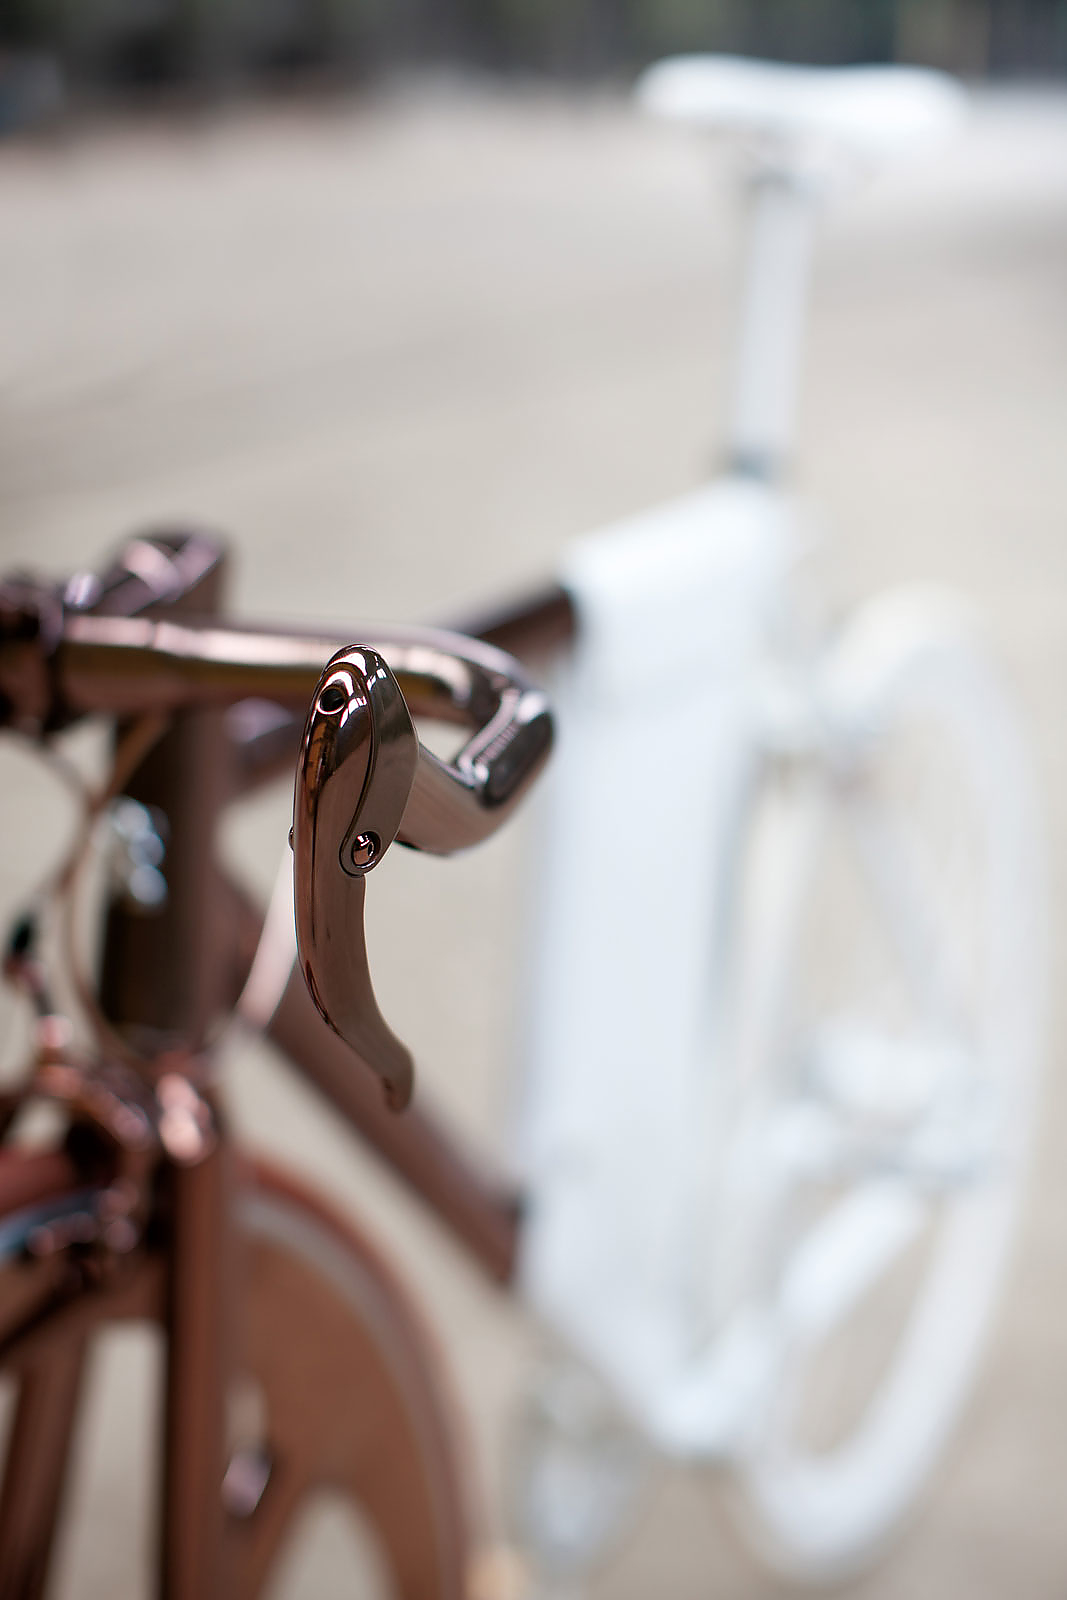 DL121 Bike by Peugeot Design Laboratory.